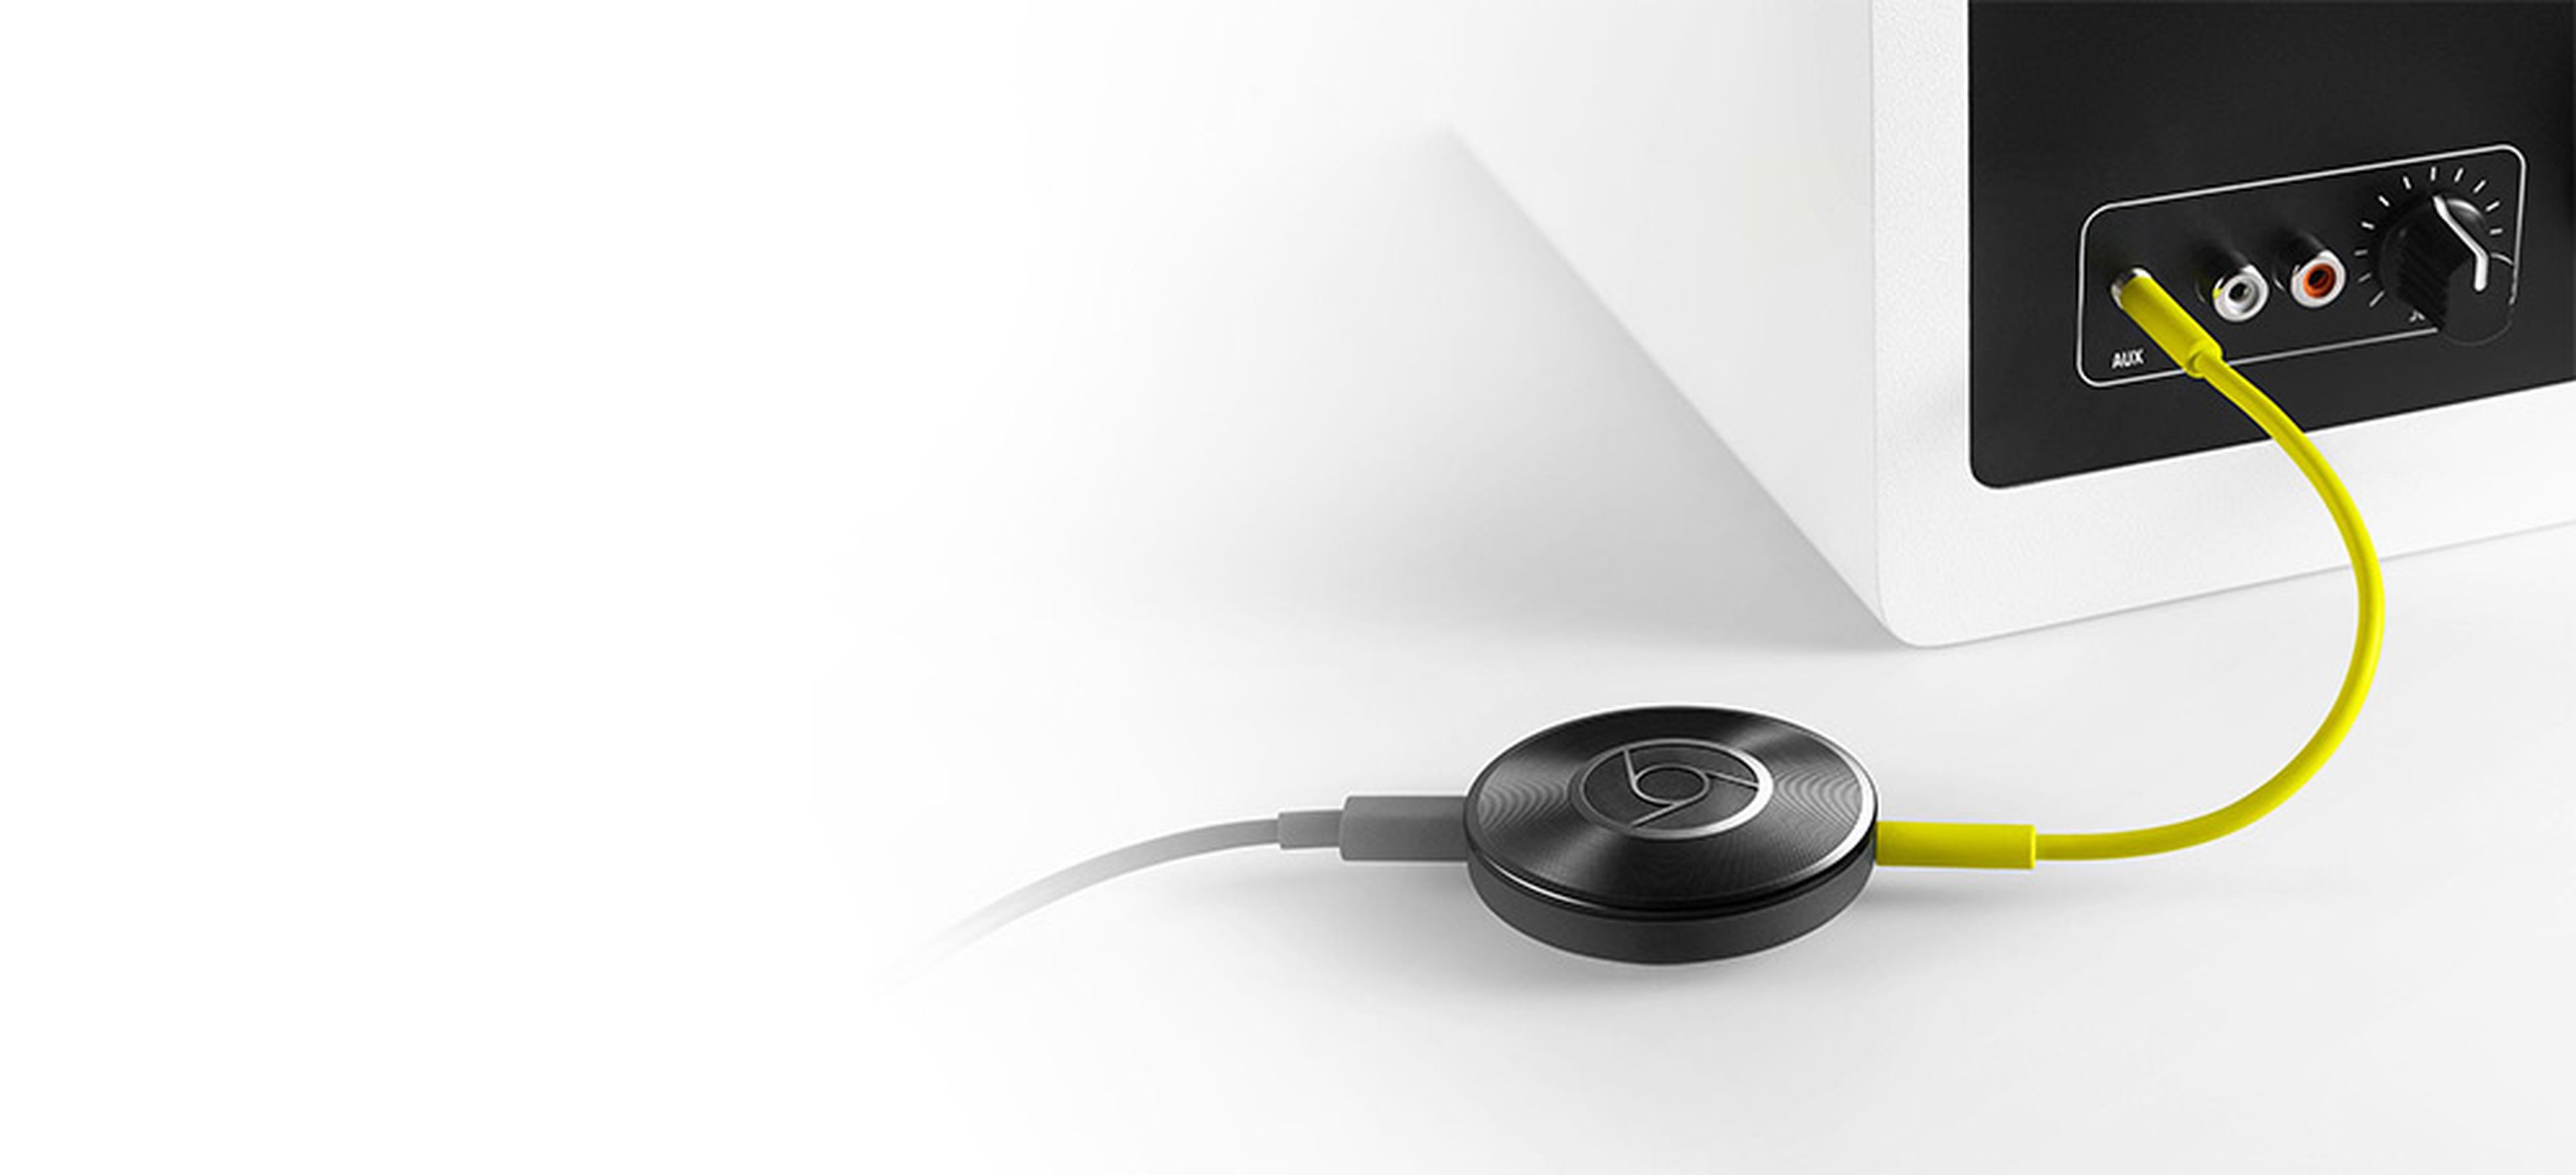 Chromecast Audio